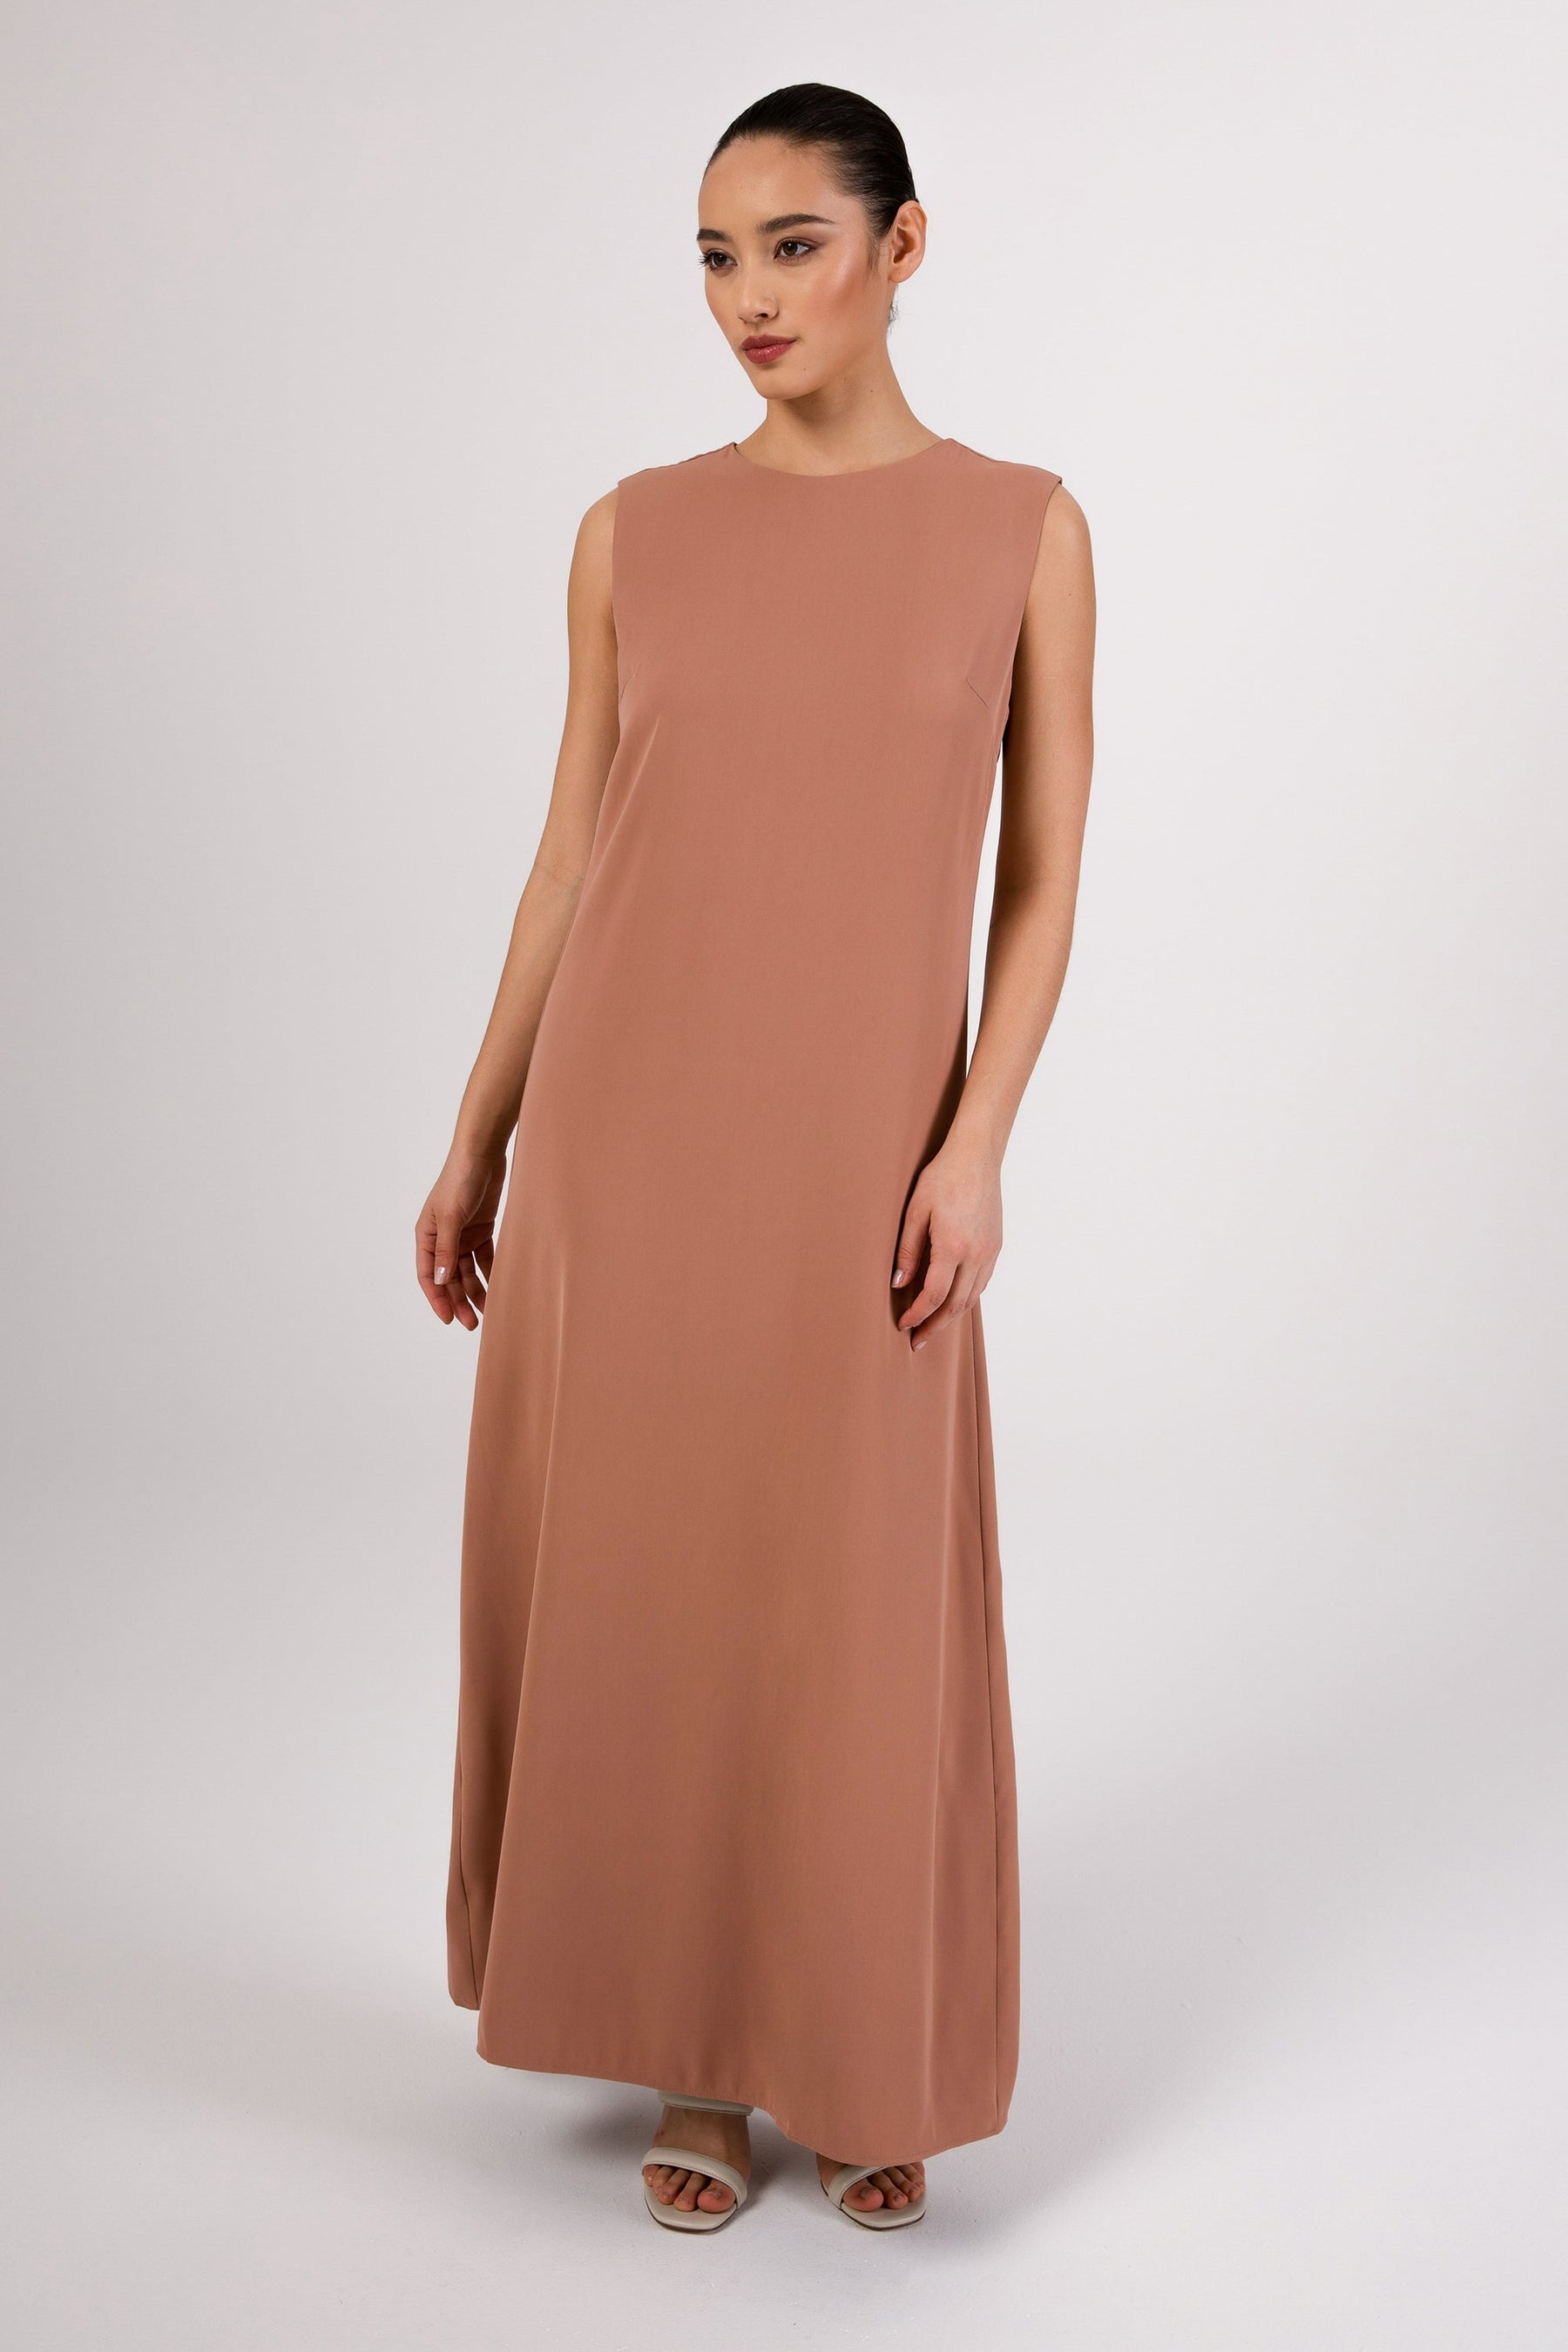 Jamila Sleeveless Maxi Dress - Desert Clay Veiled 